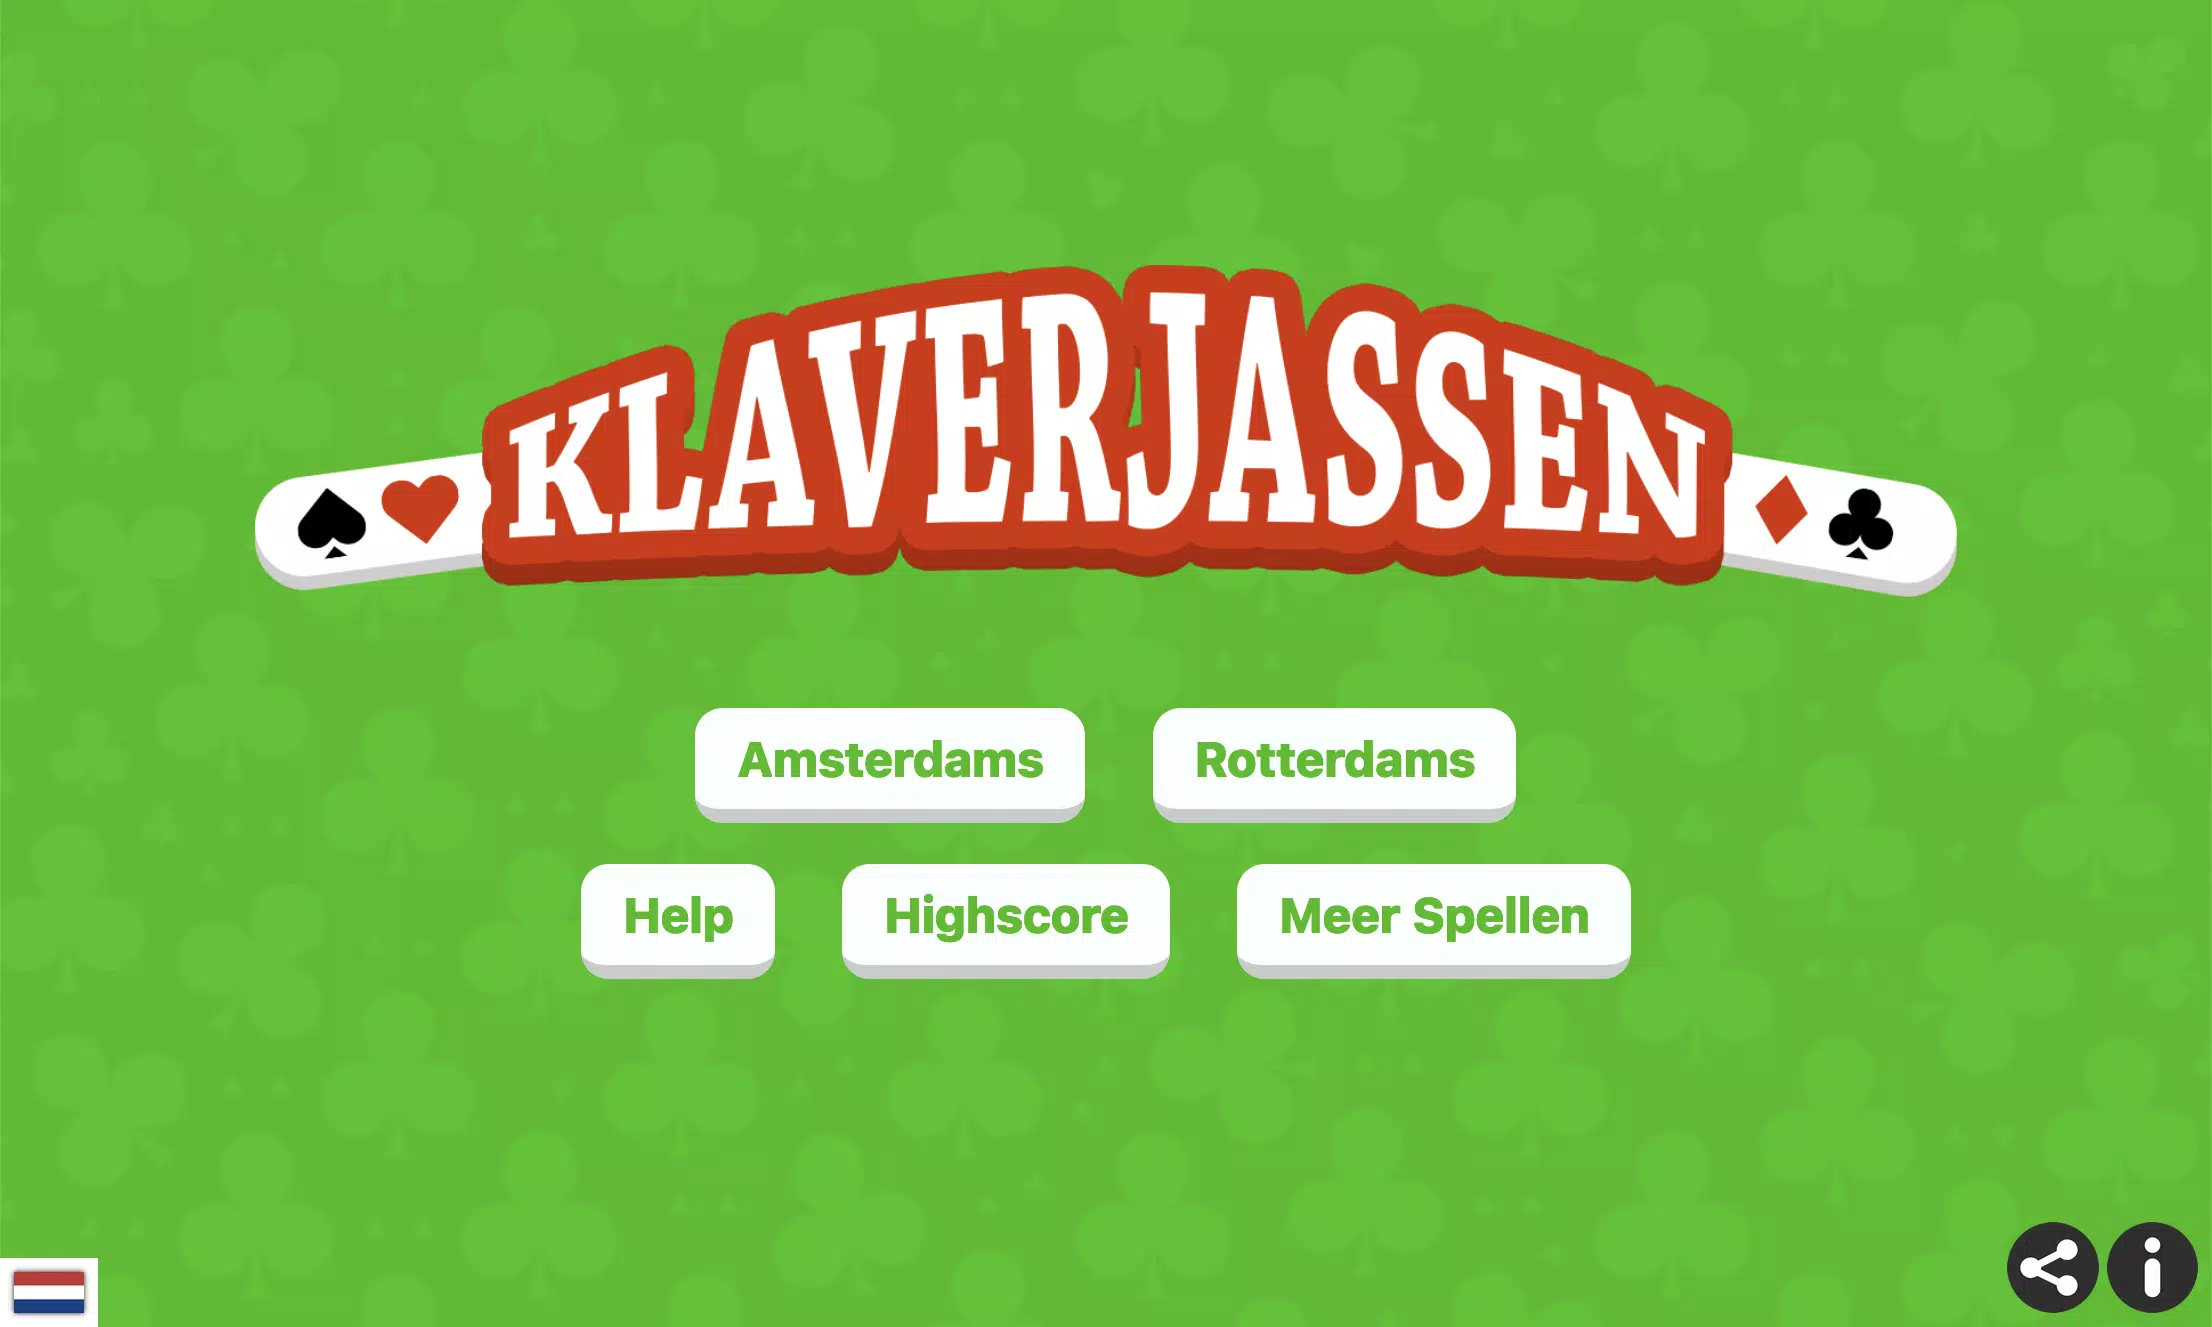 Klaverjassen - Rotterdams APK for Android Download